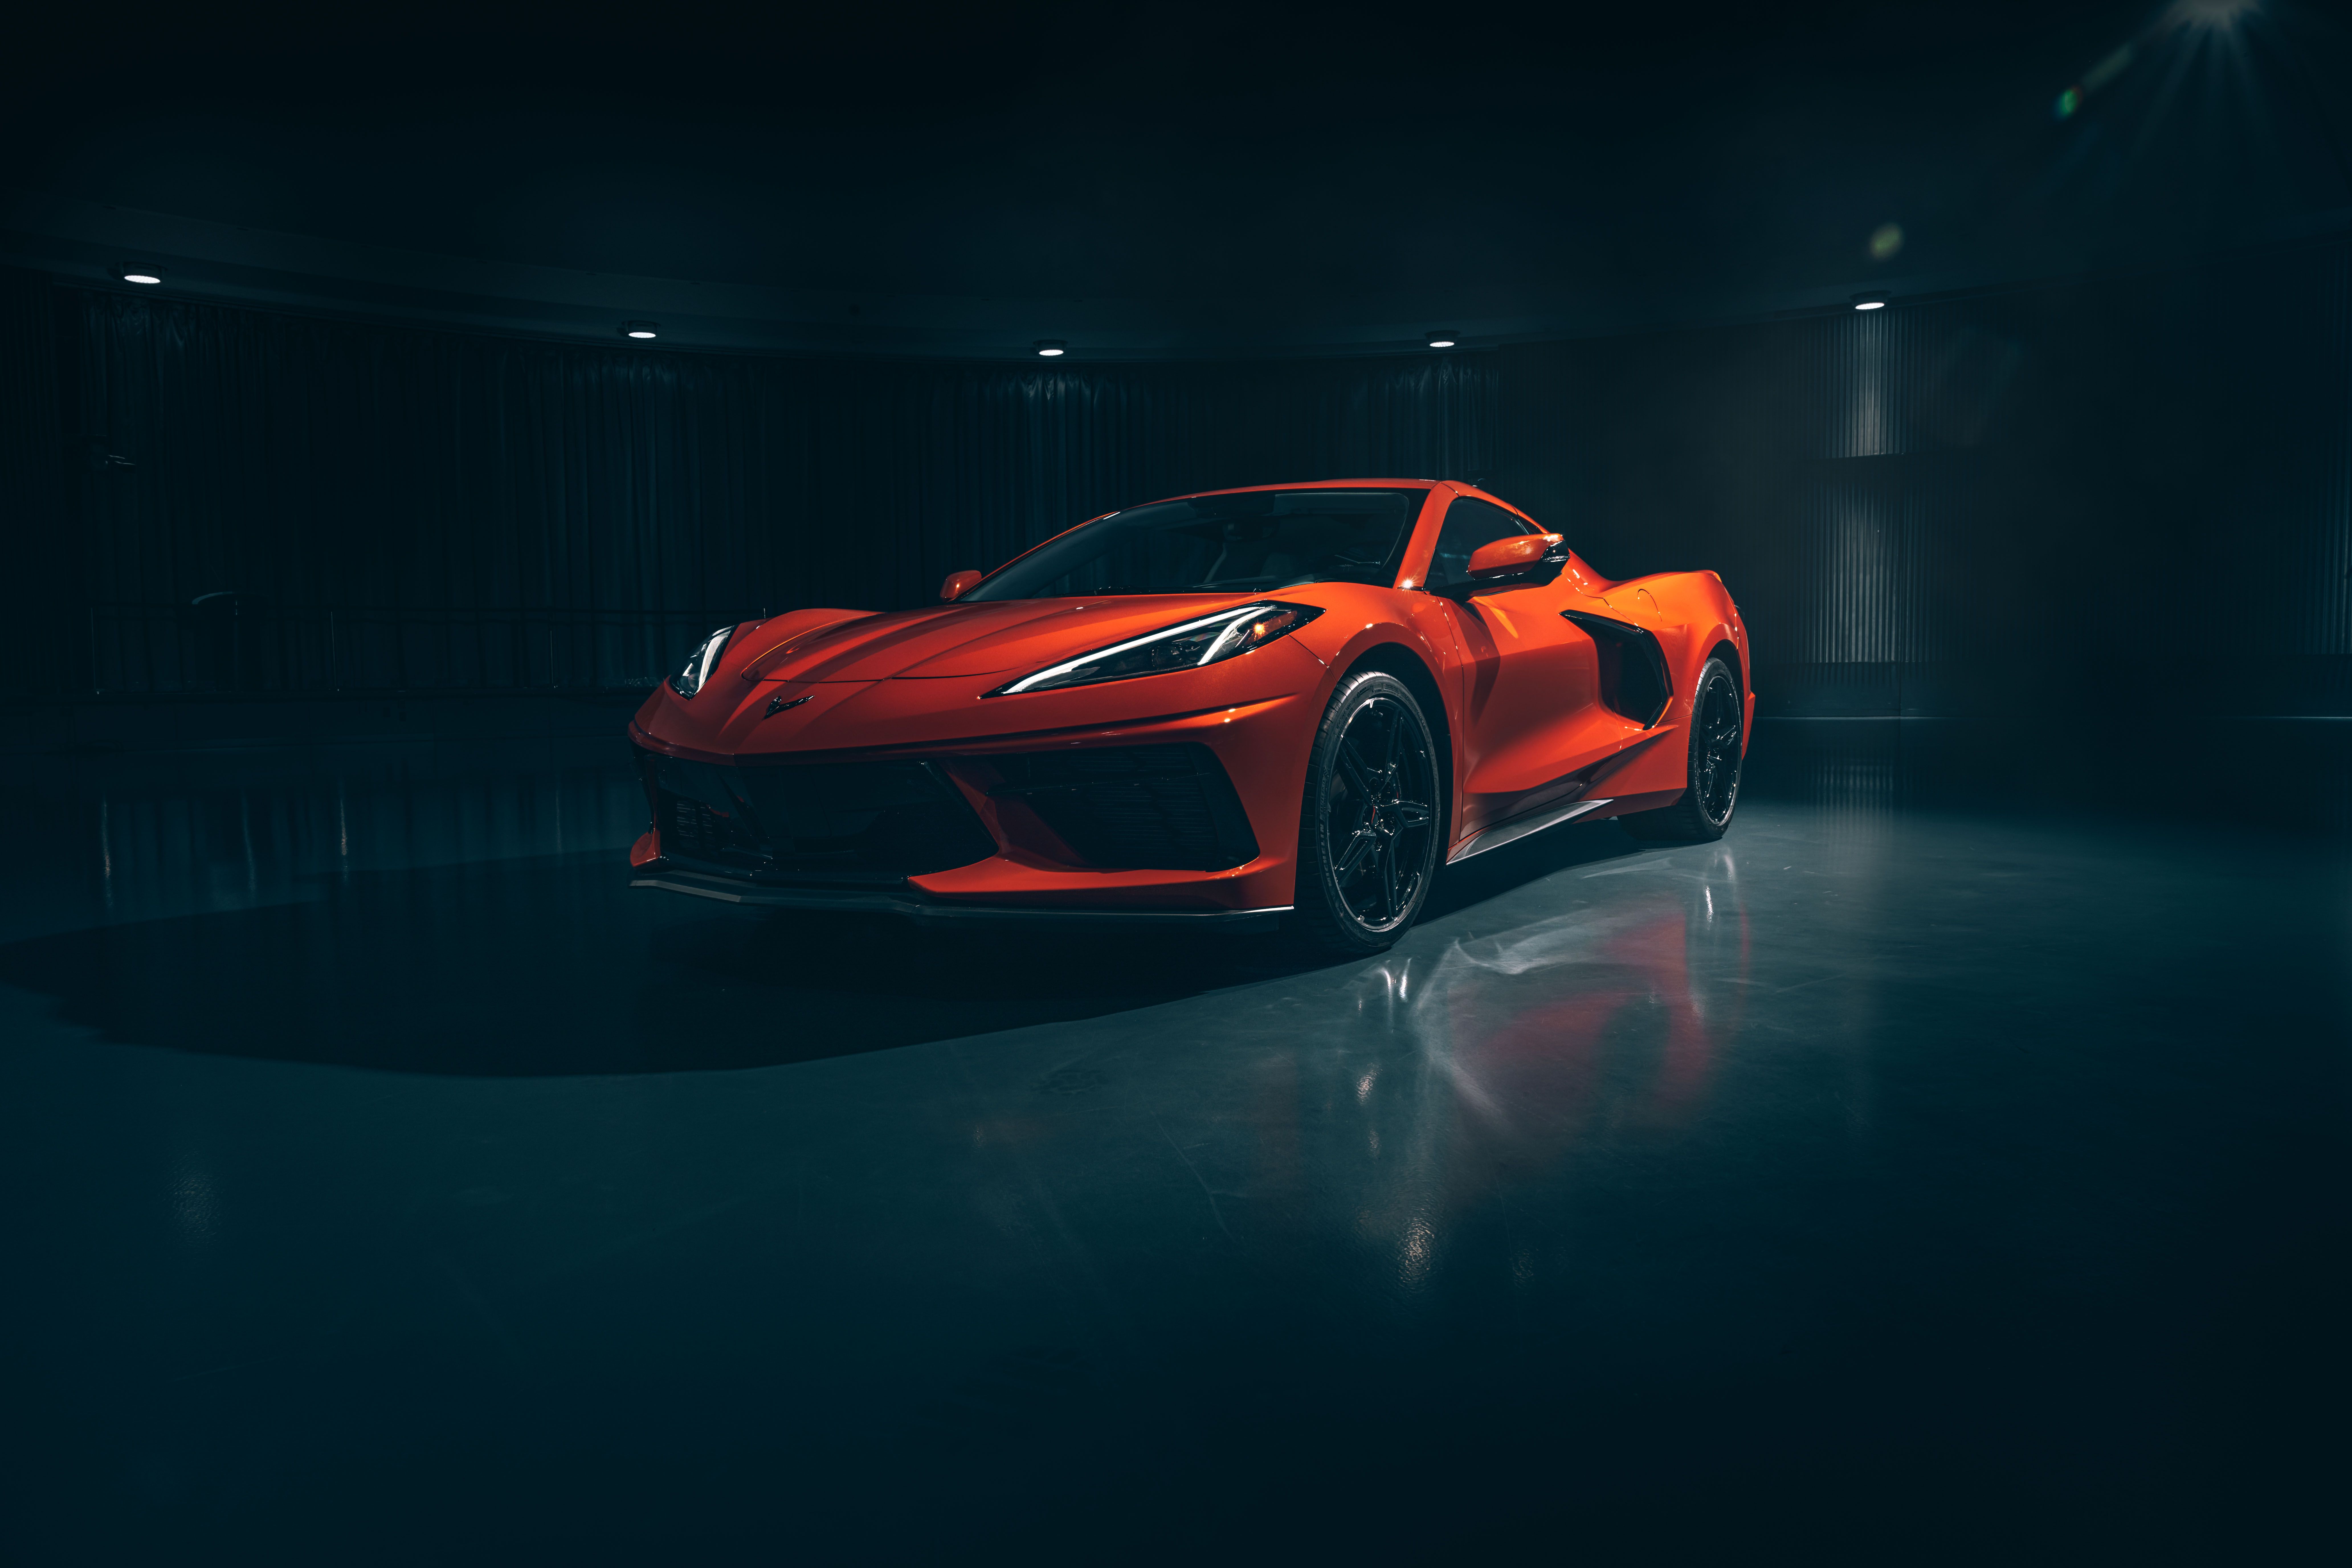 Corvette Car Wallpapers Hd For Mobile